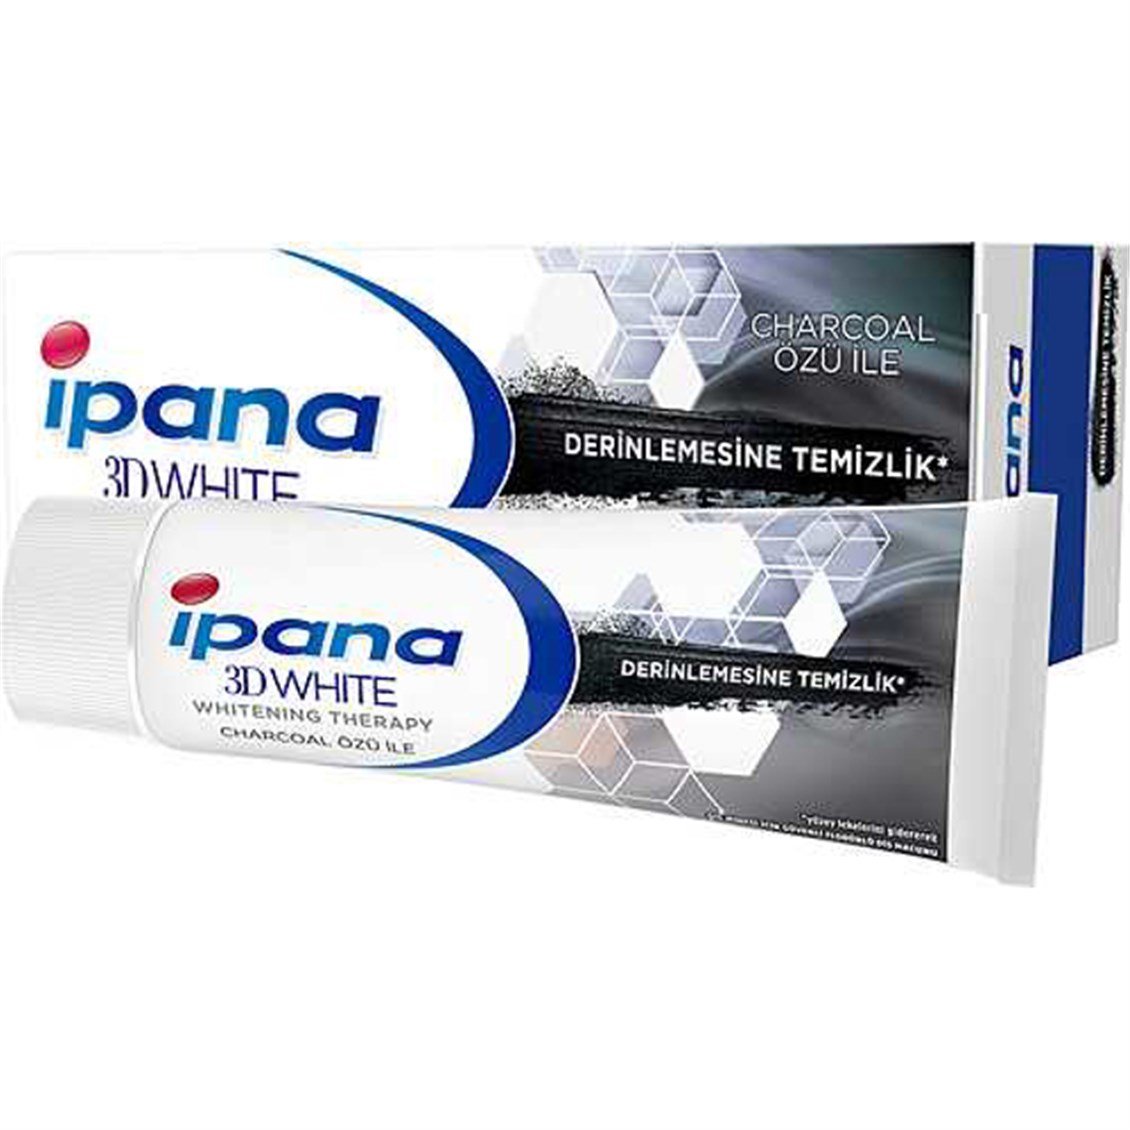 İpana 3d White Luxe Charcoal Diş Macunu 75 ml - Onur Market